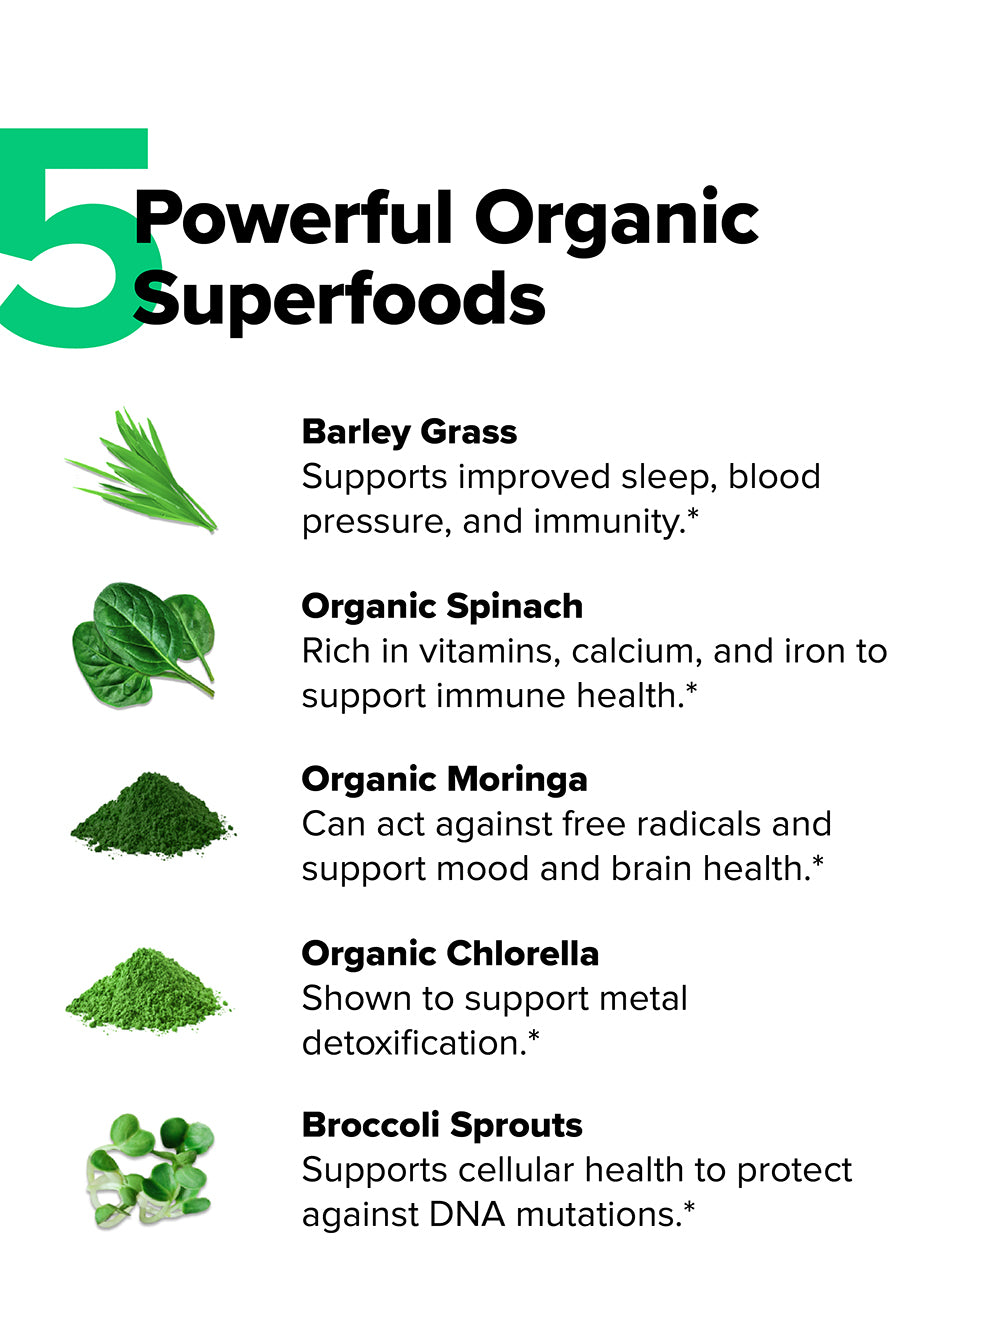 5 powerful organic superfoods. Barley grass, organic spinach, organic moringa, organic chlorella, broccoli sprouts